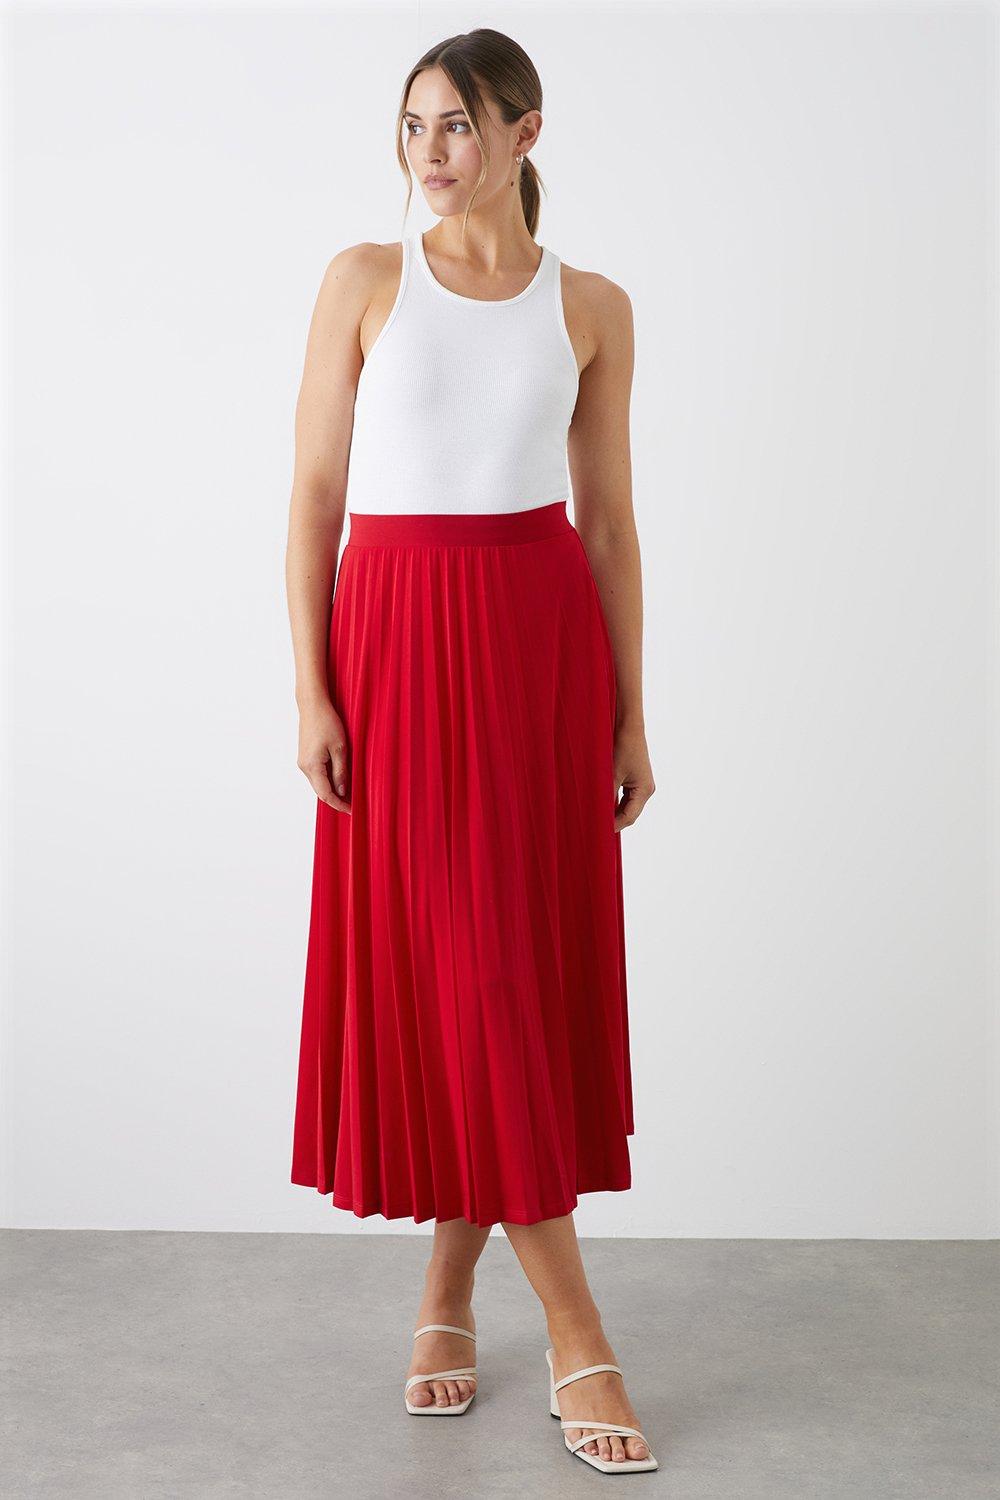 Women’s Pleated Midi Skirt - red - 8